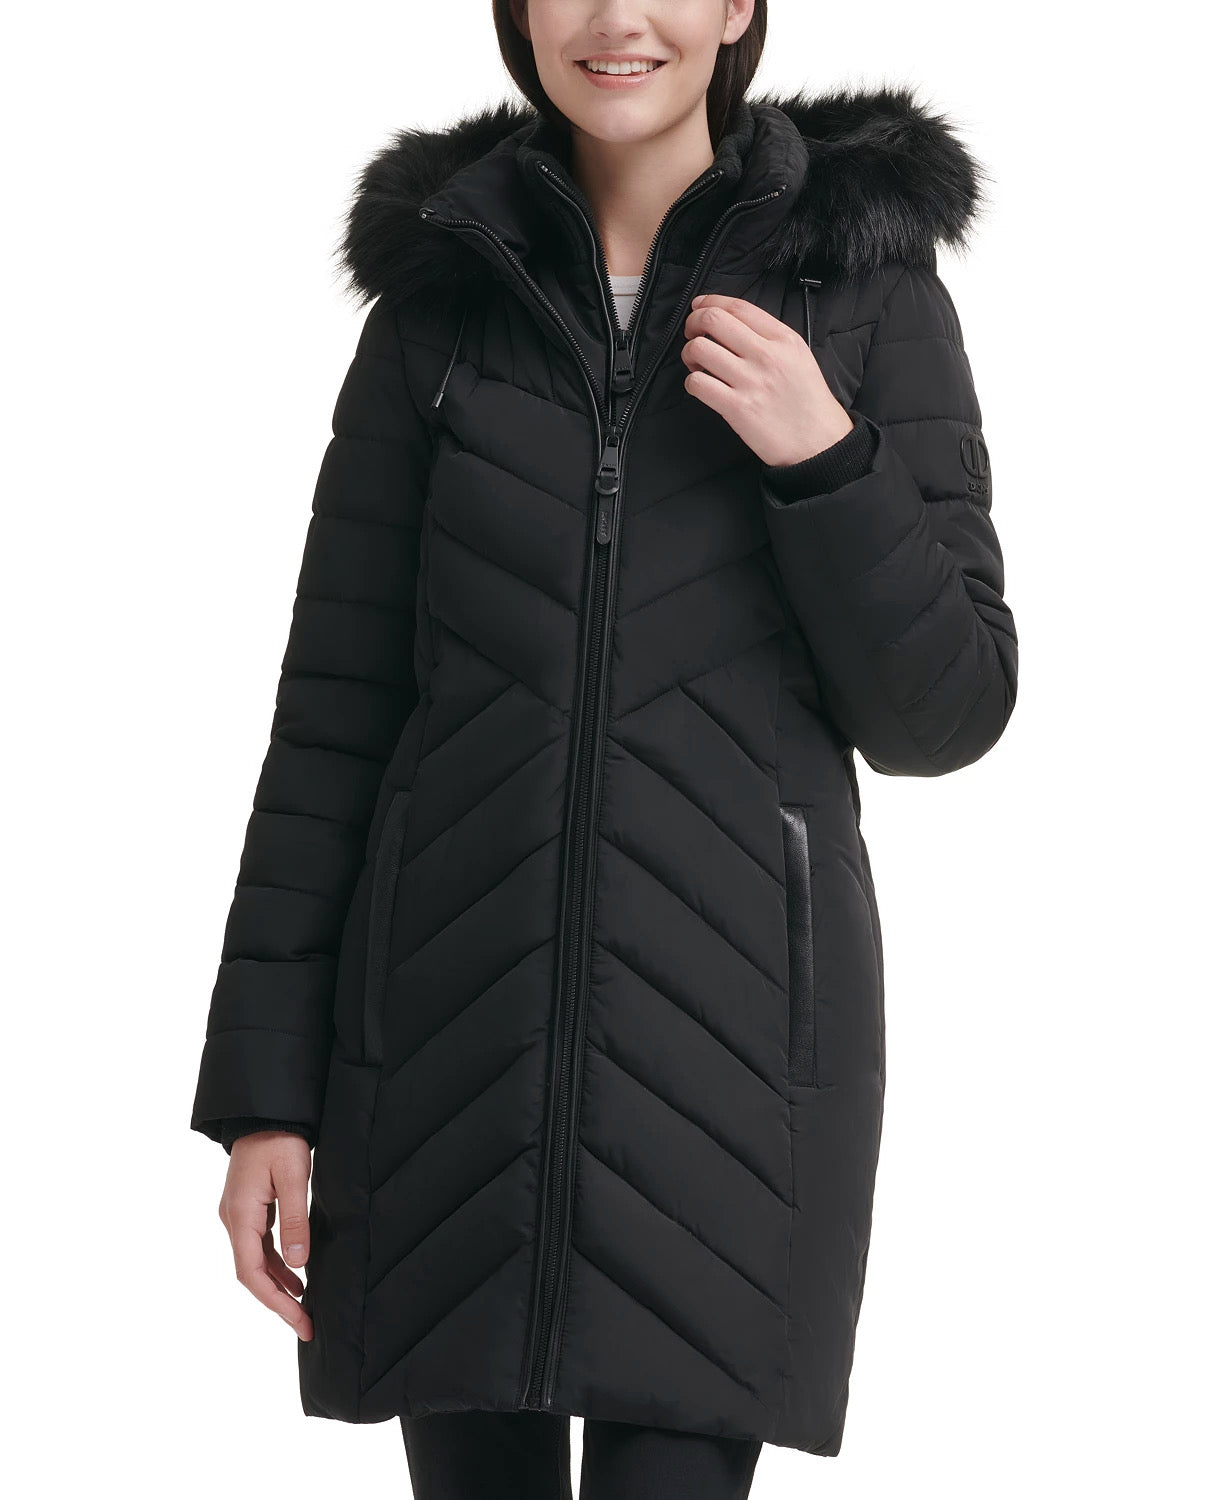 Dkny Women's Faux-Fur-Trim Hooded Puffer Coat Black XL